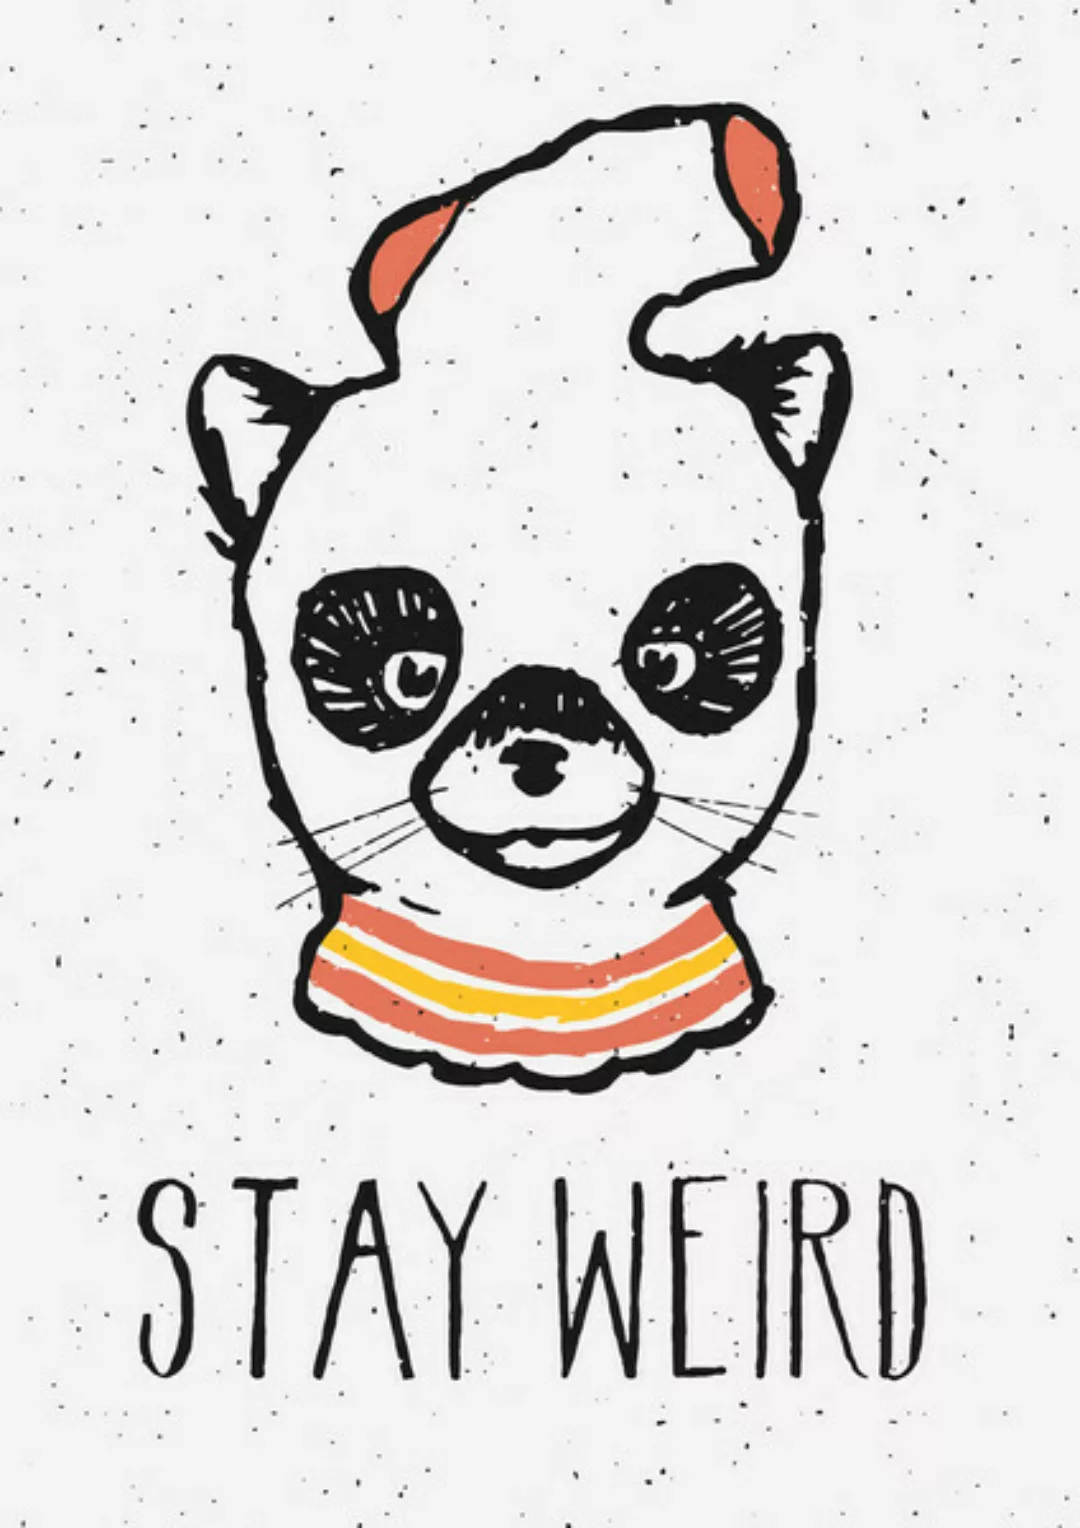 Poster / Leinwandbild - Stay Weird günstig online kaufen